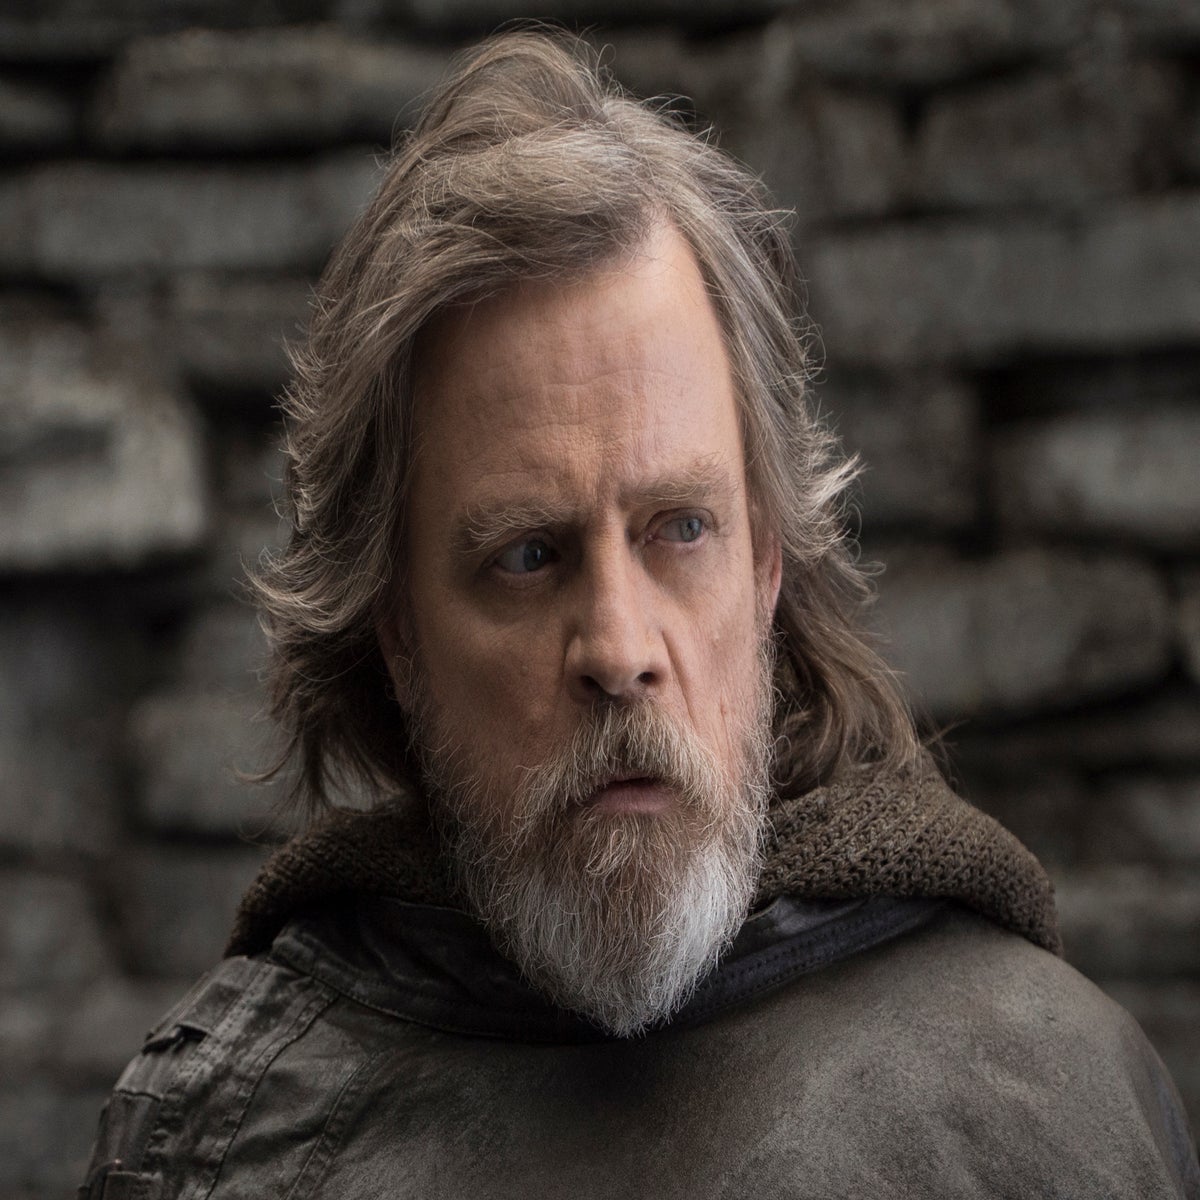 Last Jedi Director Rian Johnson Will Create a Whole New Star Wars Trilogy